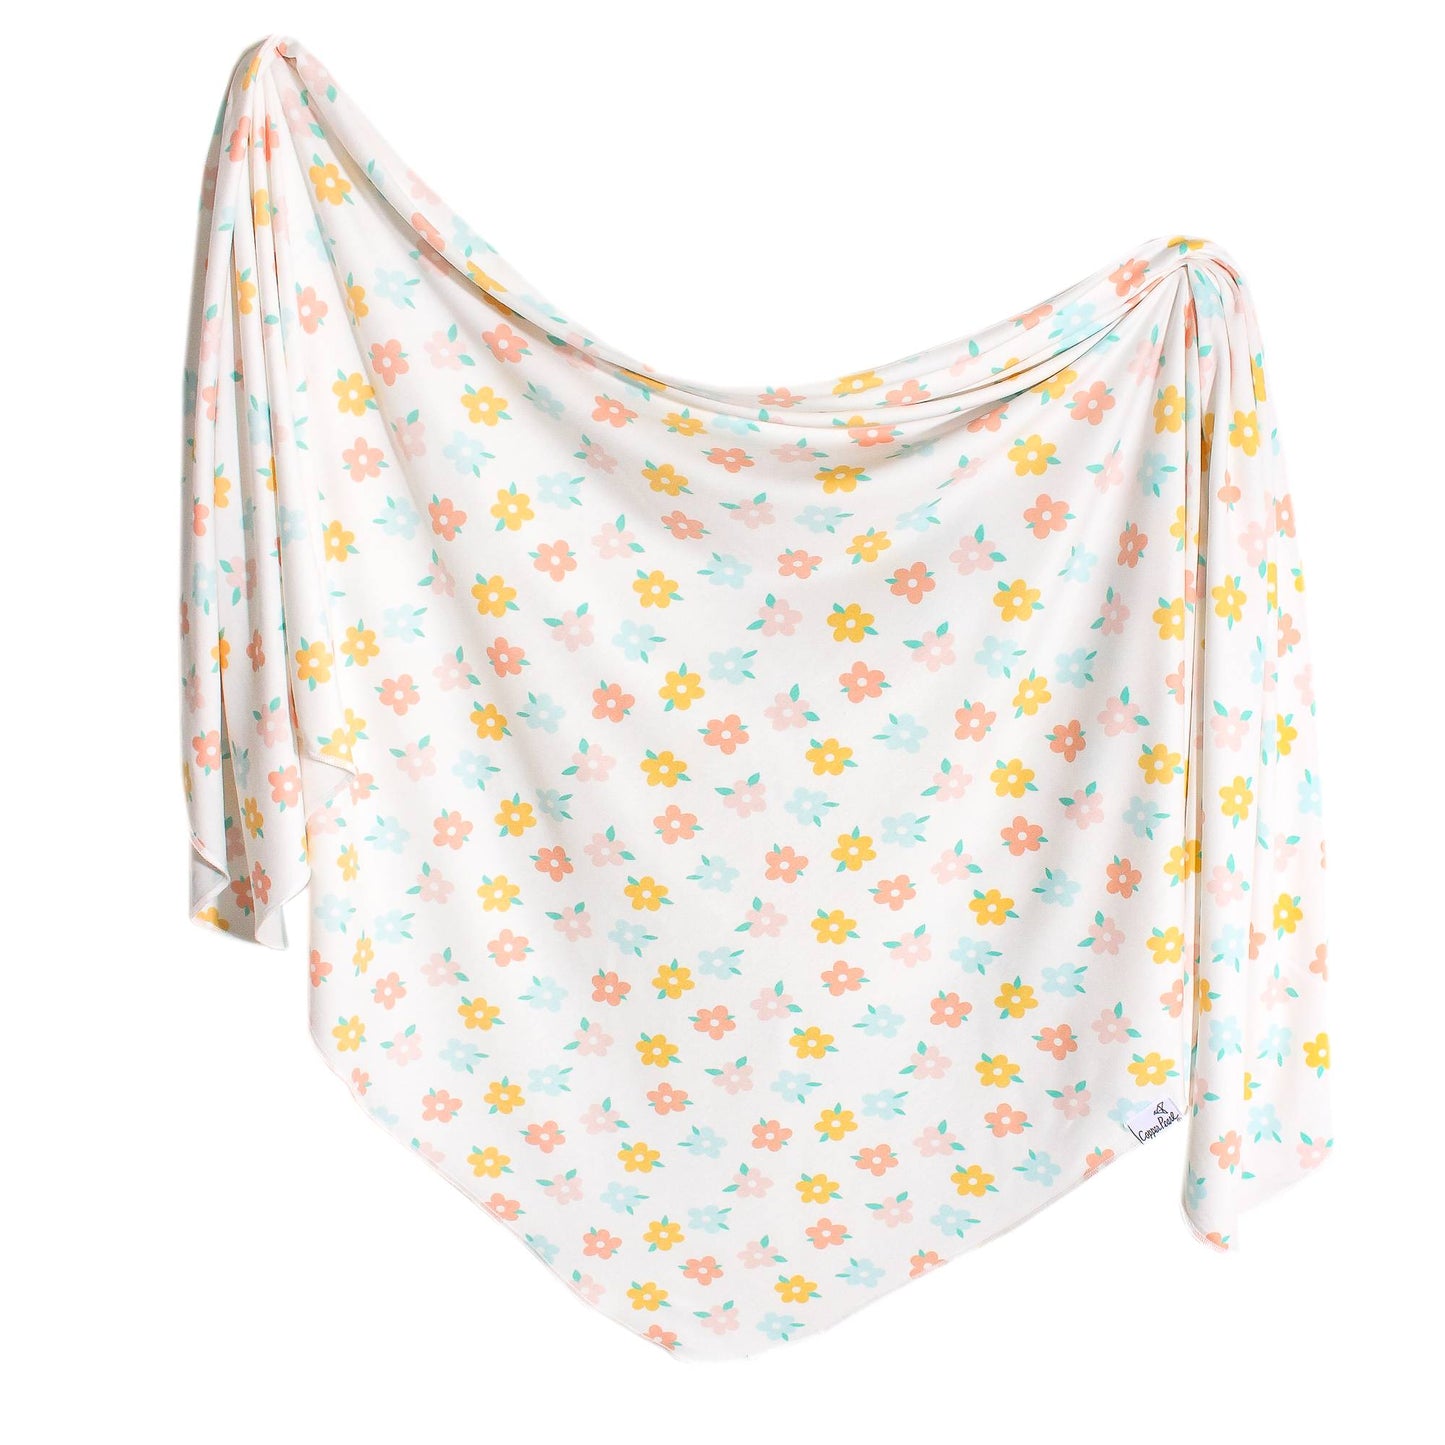 Knit Blanket - Daisy